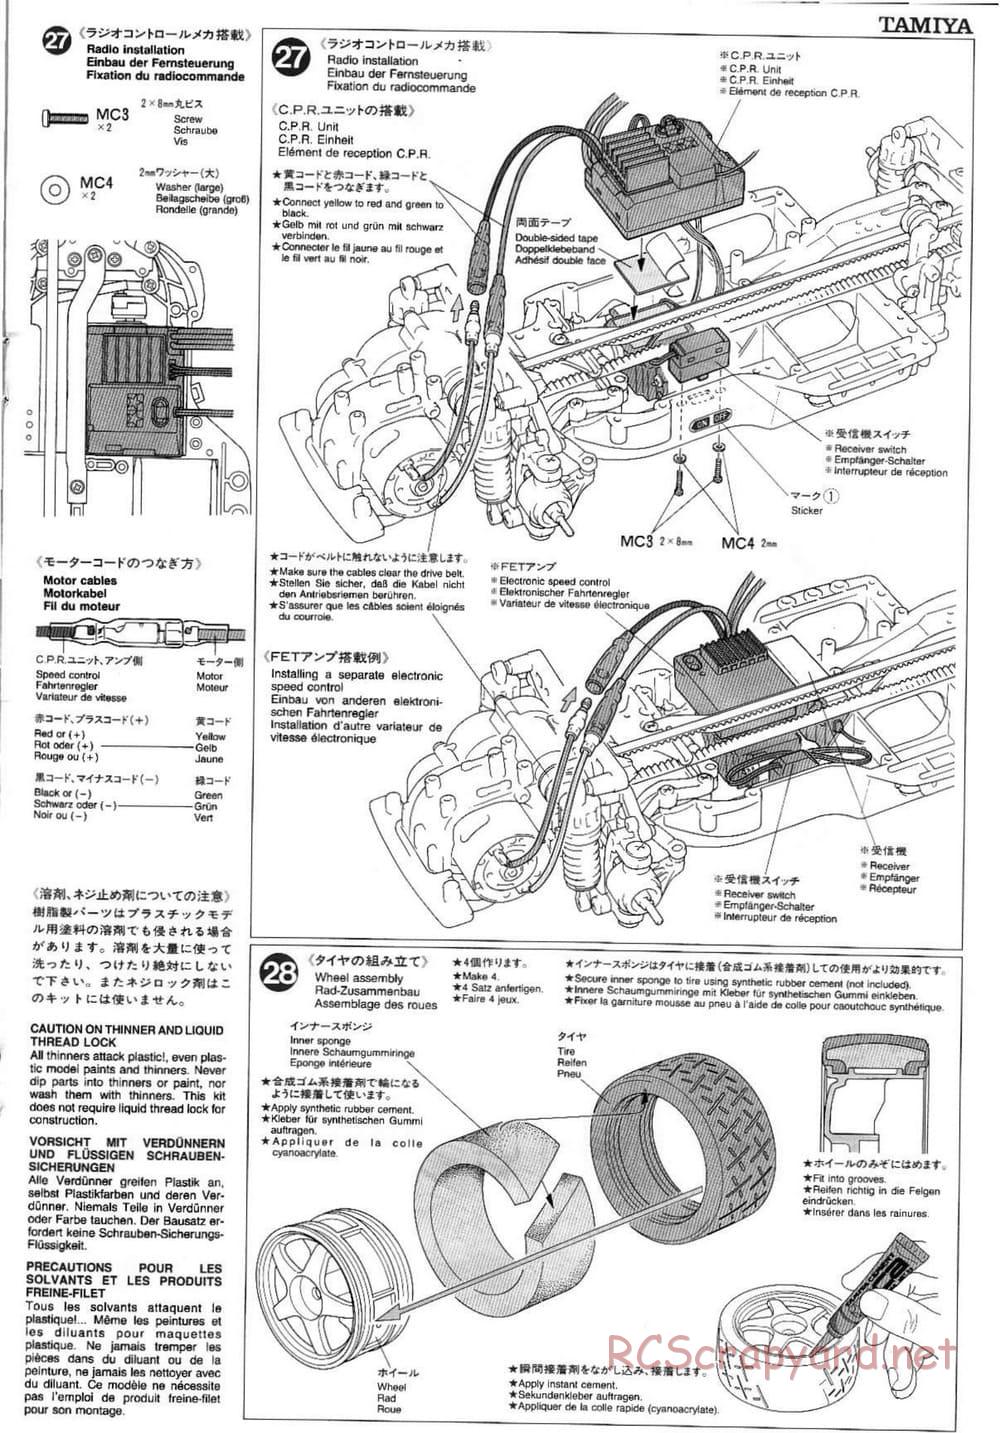 Tamiya - Mitsubishi Lancer Evolution V WRC - TA-03F Chassis - Manual - Page 15